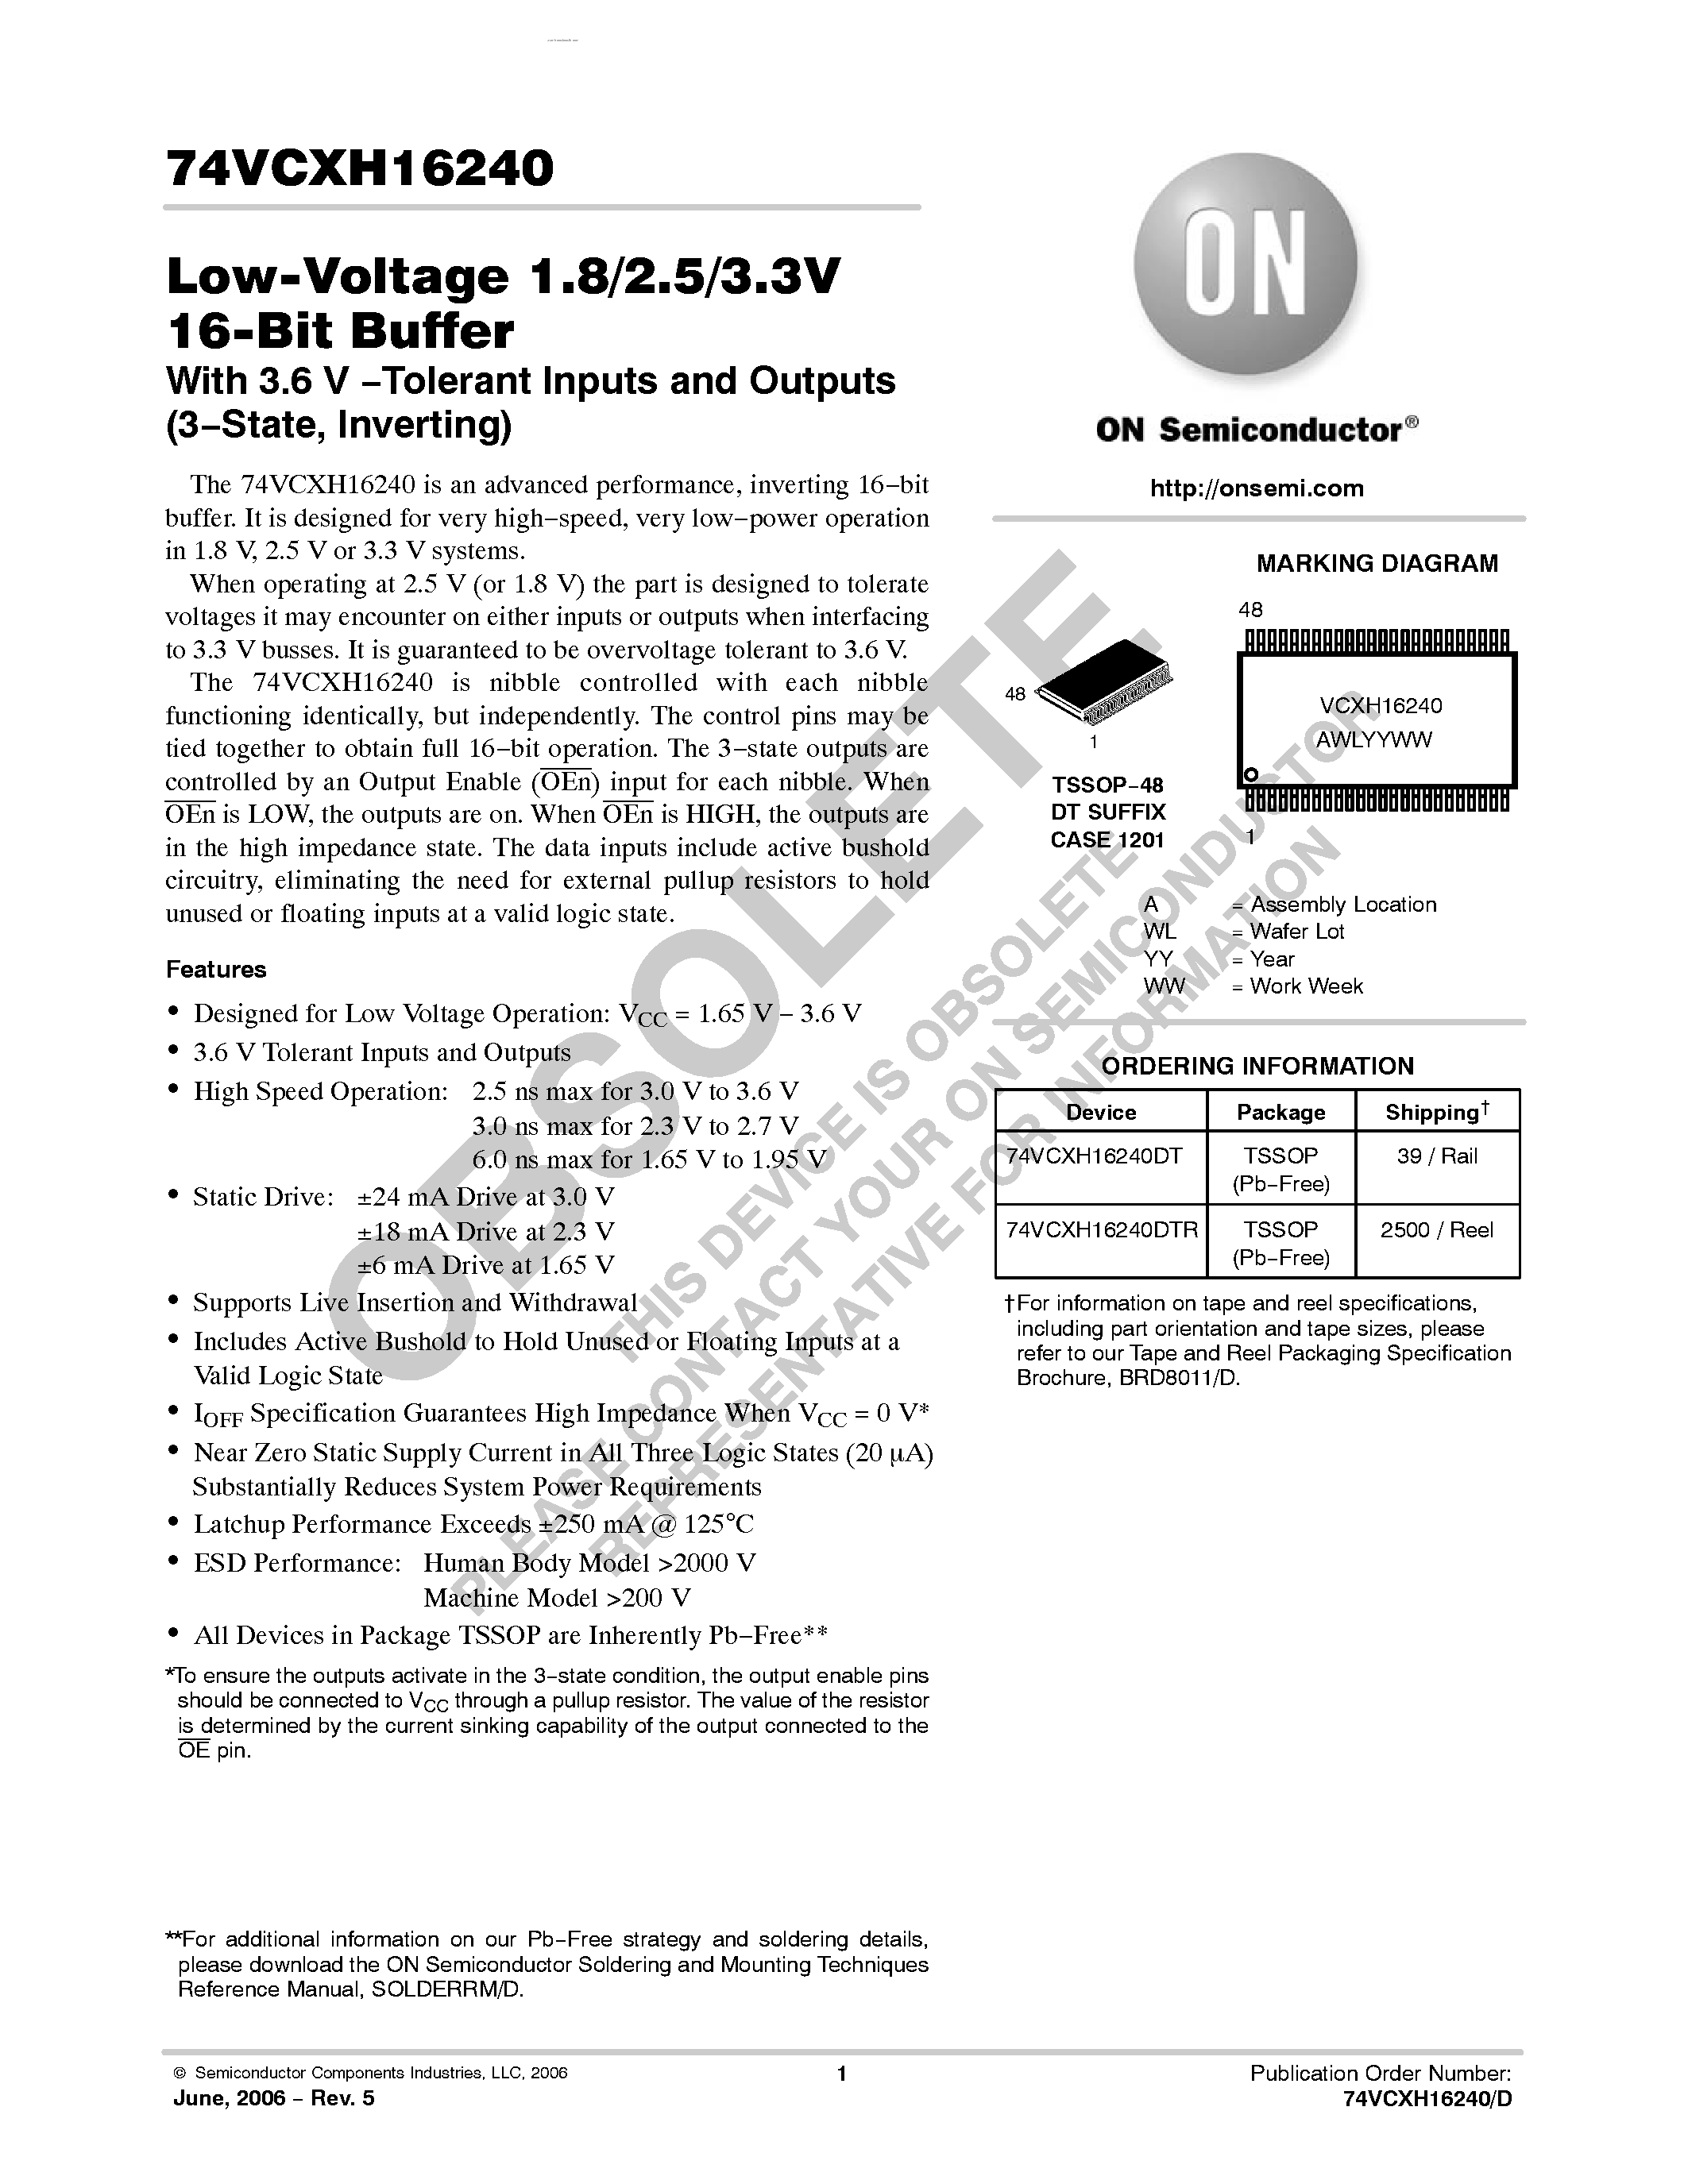 Datasheet 74VCXH16240 - Low-Voltage 1.8/2.5/3.3V 16-Bit Buffer page 1